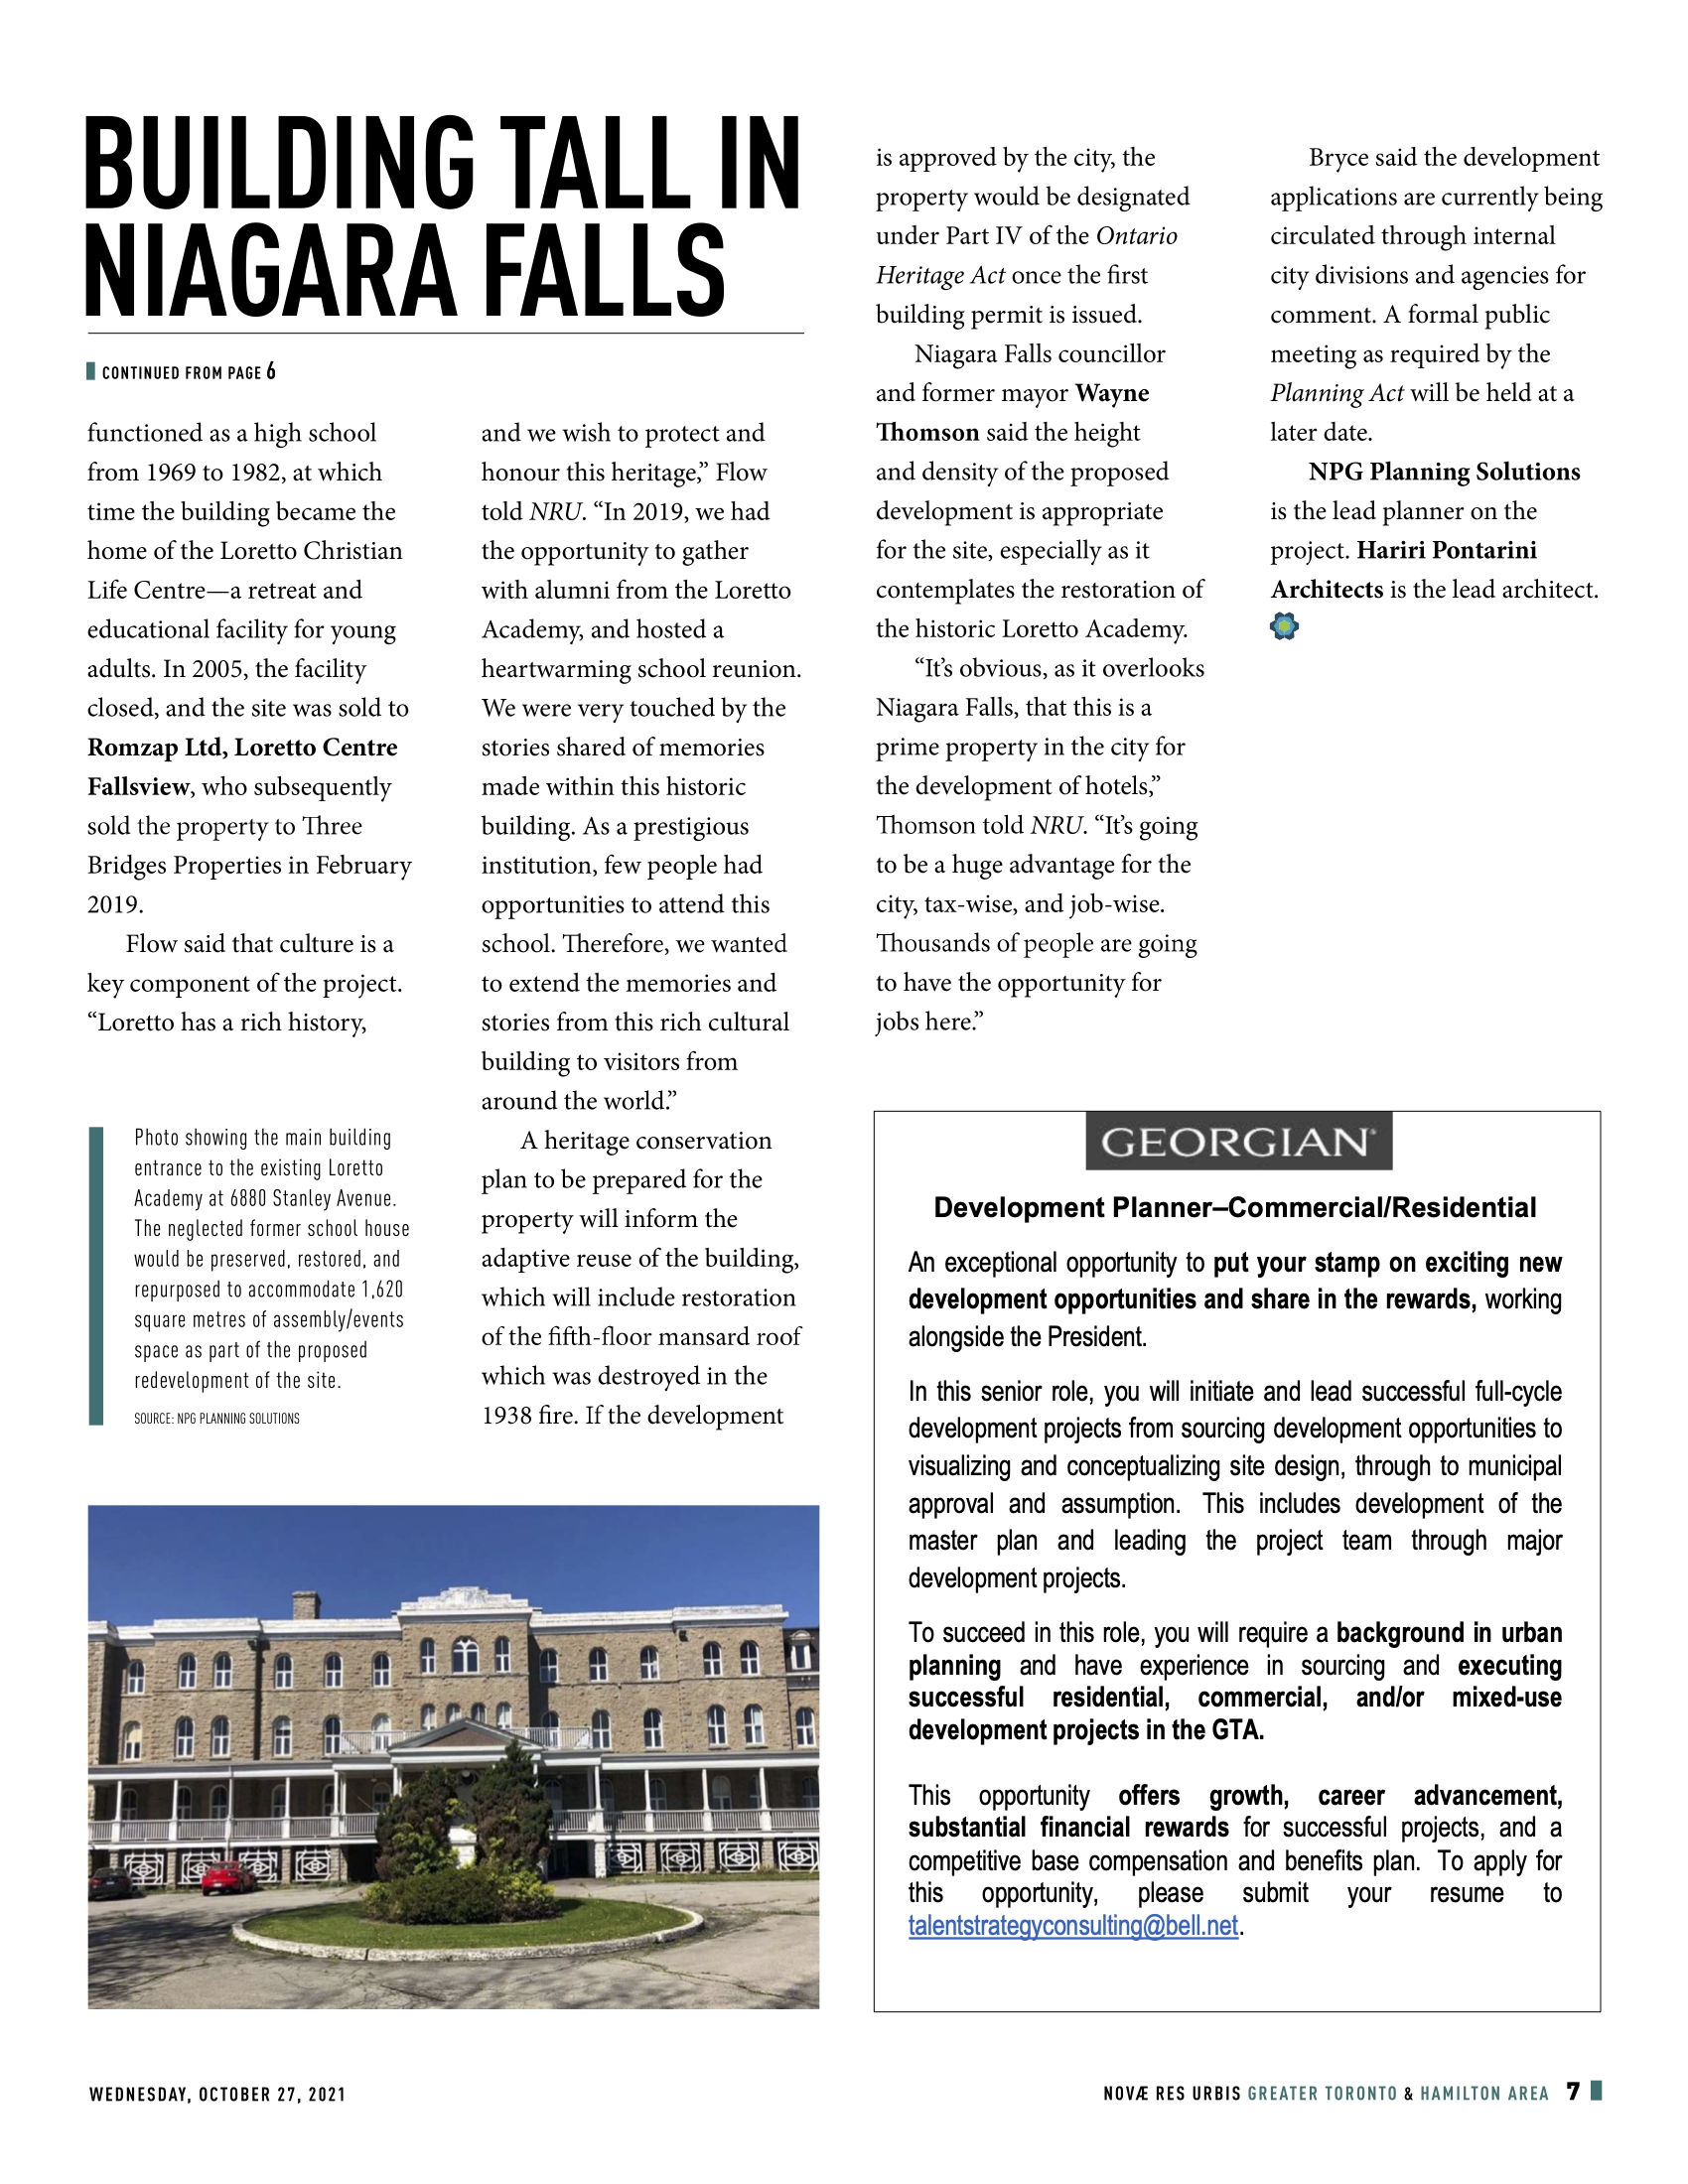 Building Tall in Niagara Falls by Marc Mitanis, NRU Publishing Inc (dragged)